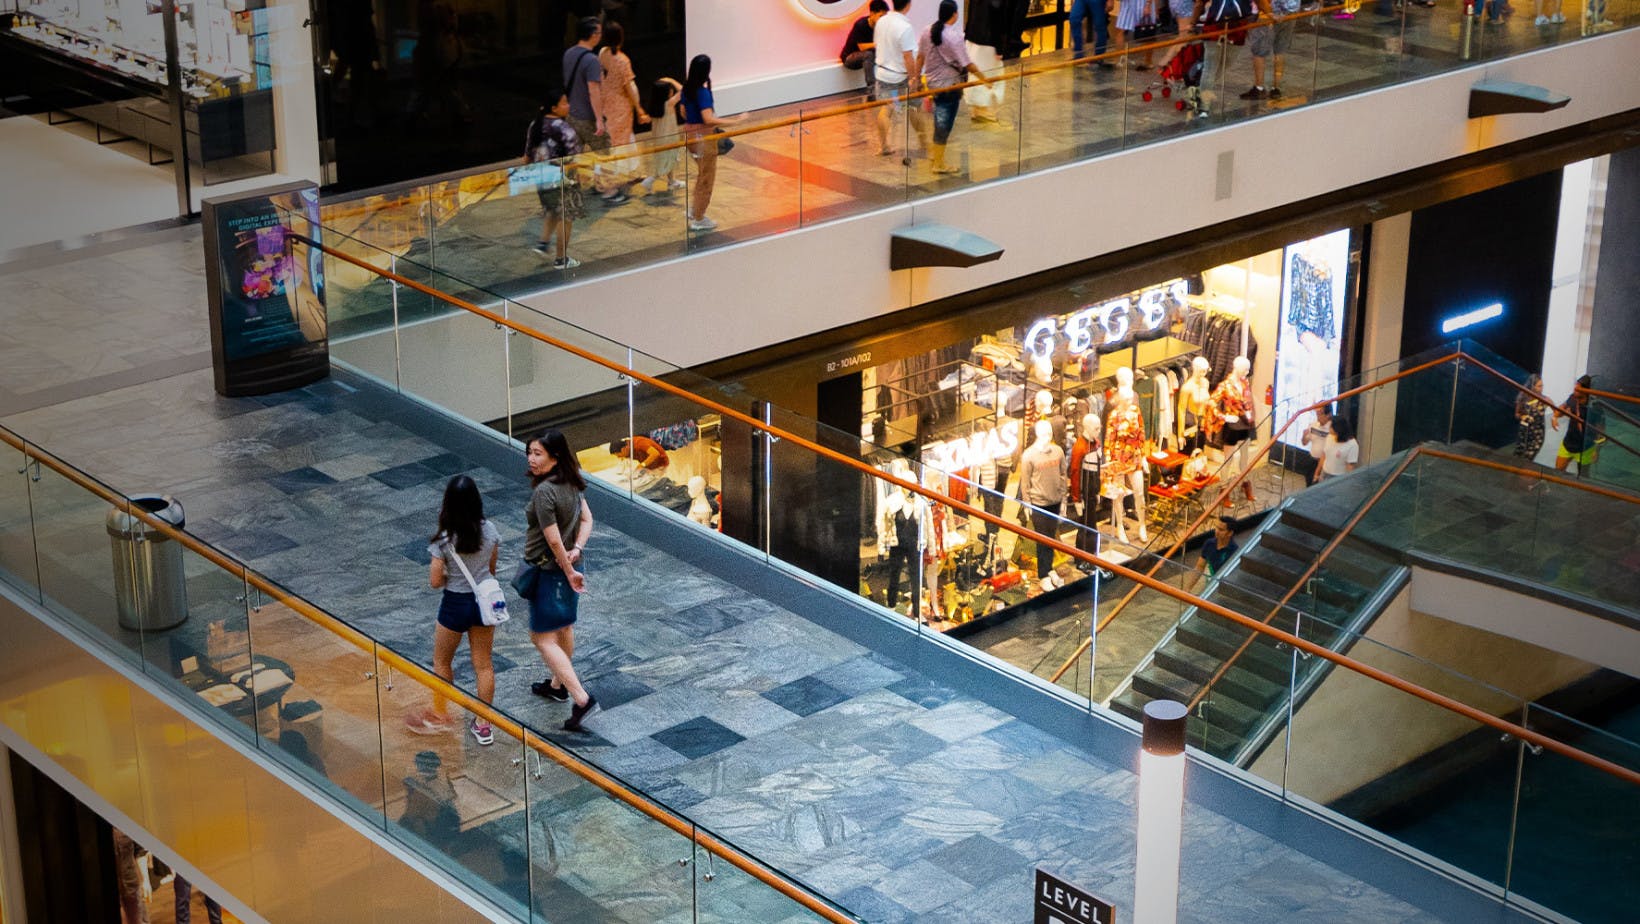 Shopping mall walkway view showing people walking